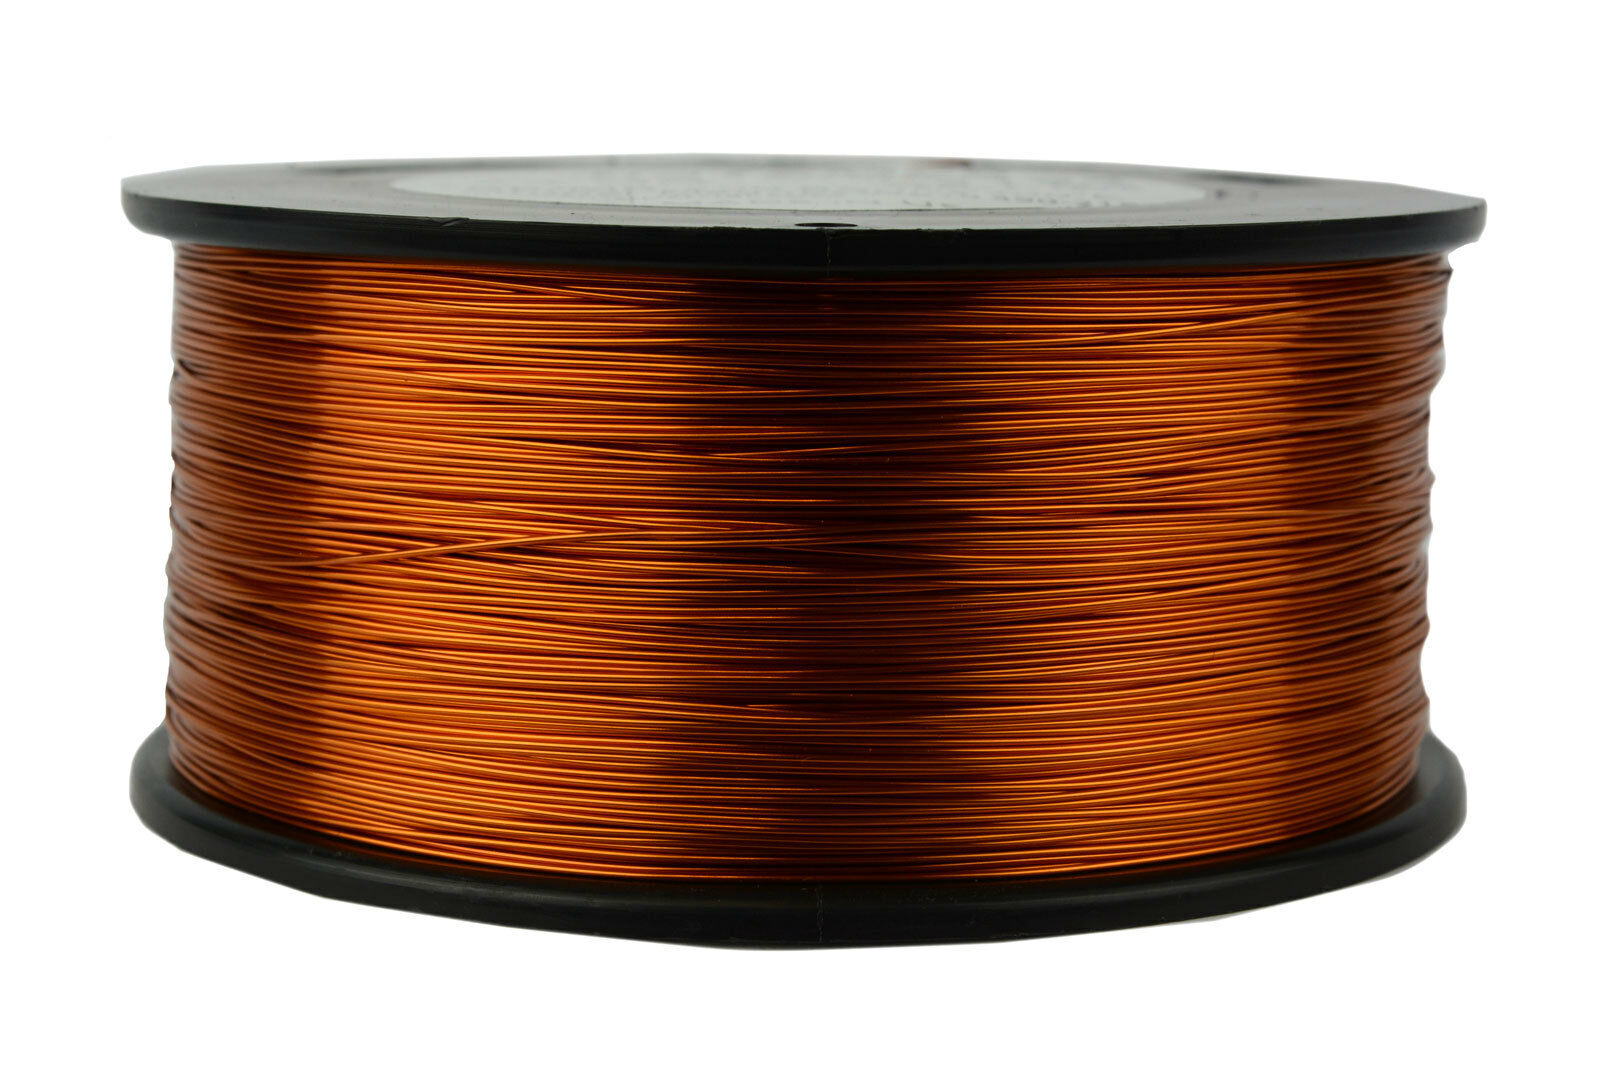 Temco 24 Awg Gauge Enameled Copper Magnet Wire 200c 1.5lb 1185ft Coil Winding